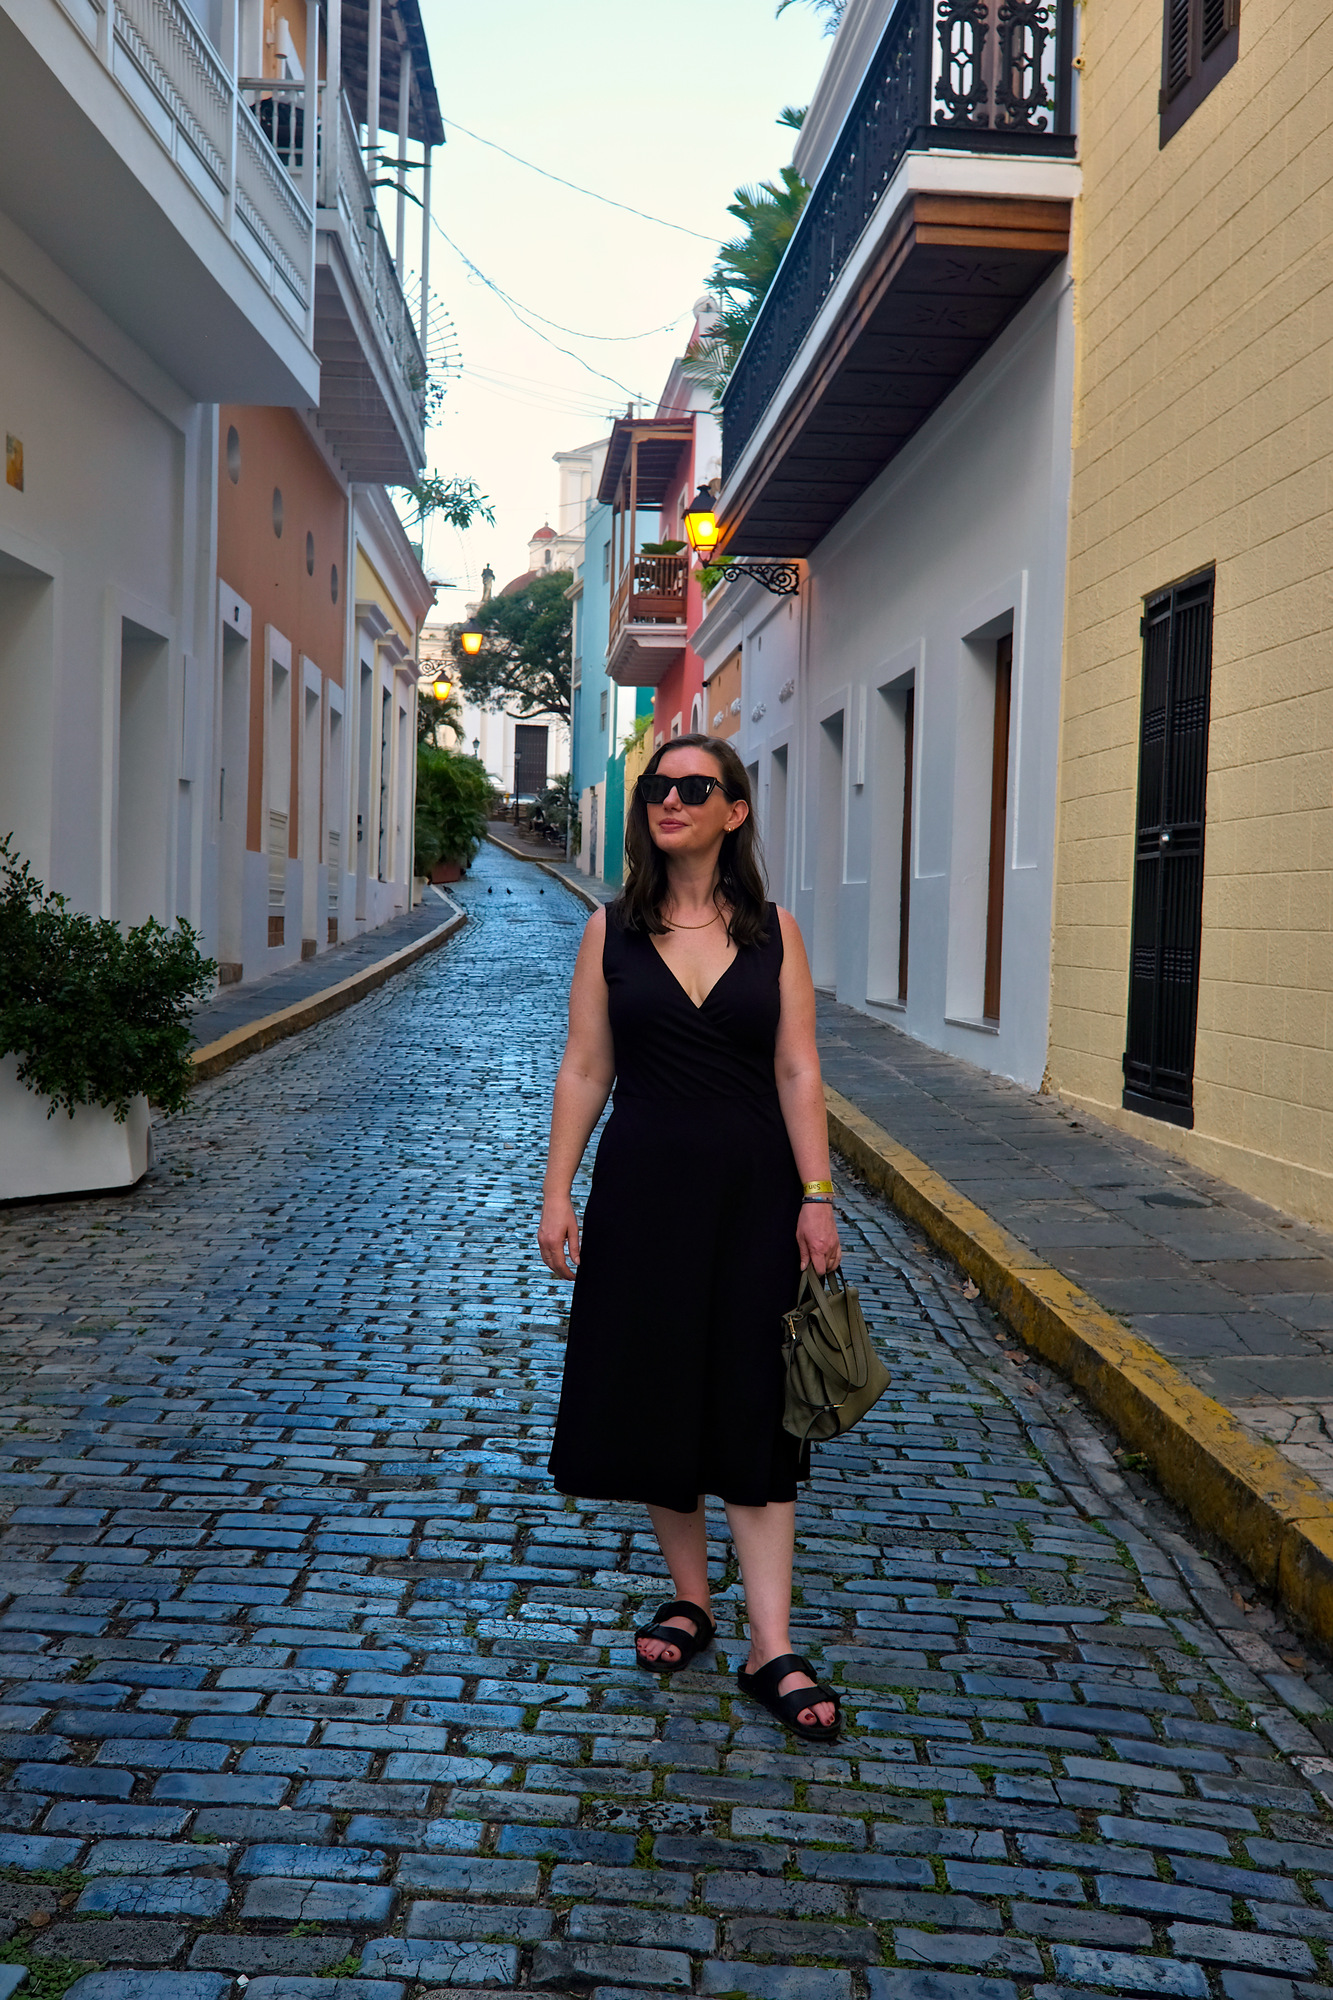 Alyssa stands on a cobblestone street in San Juan